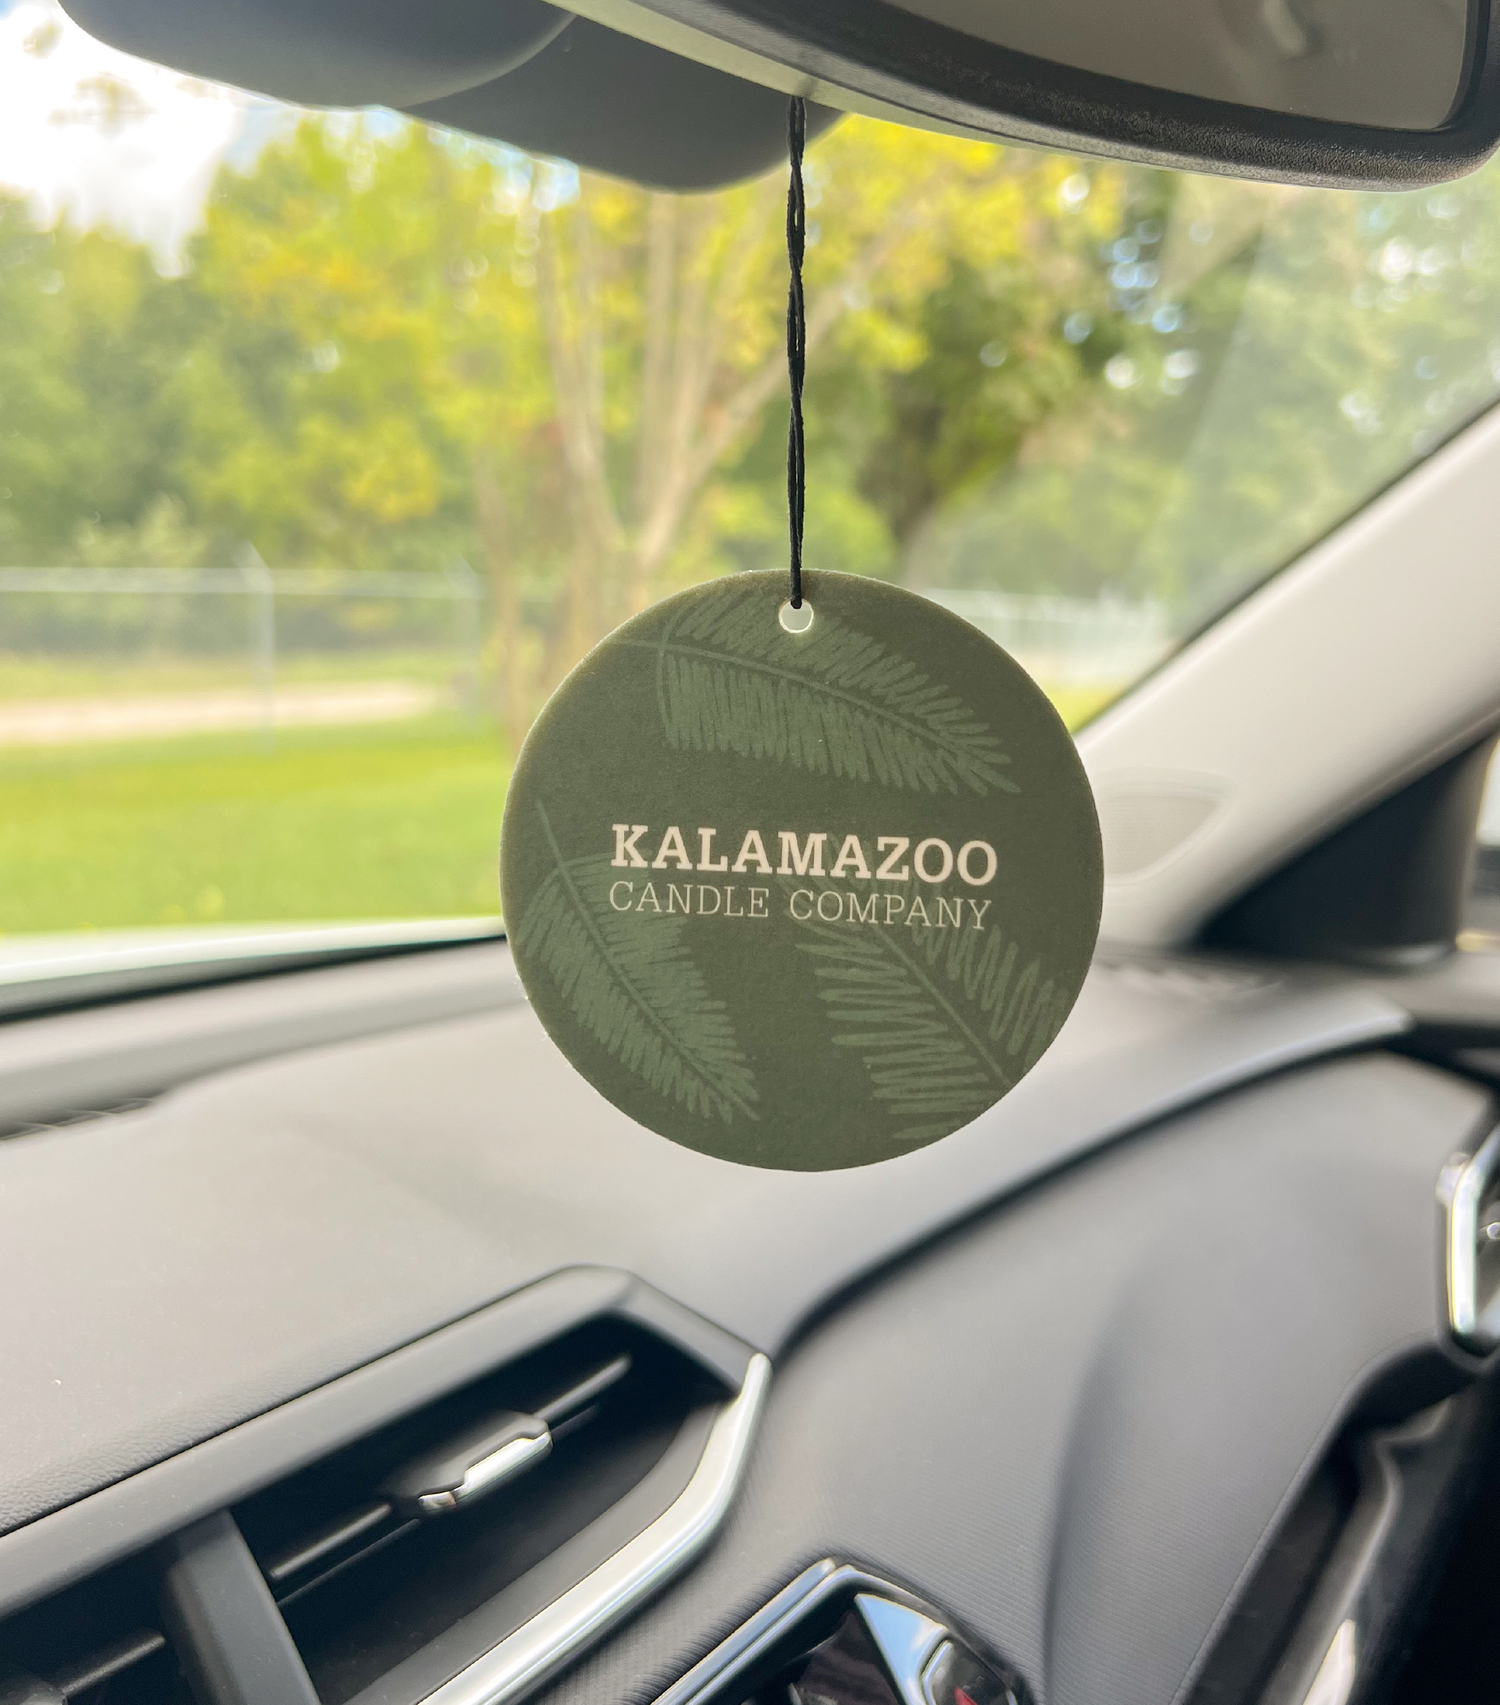 Balsam &amp; Cedar Car Freshener